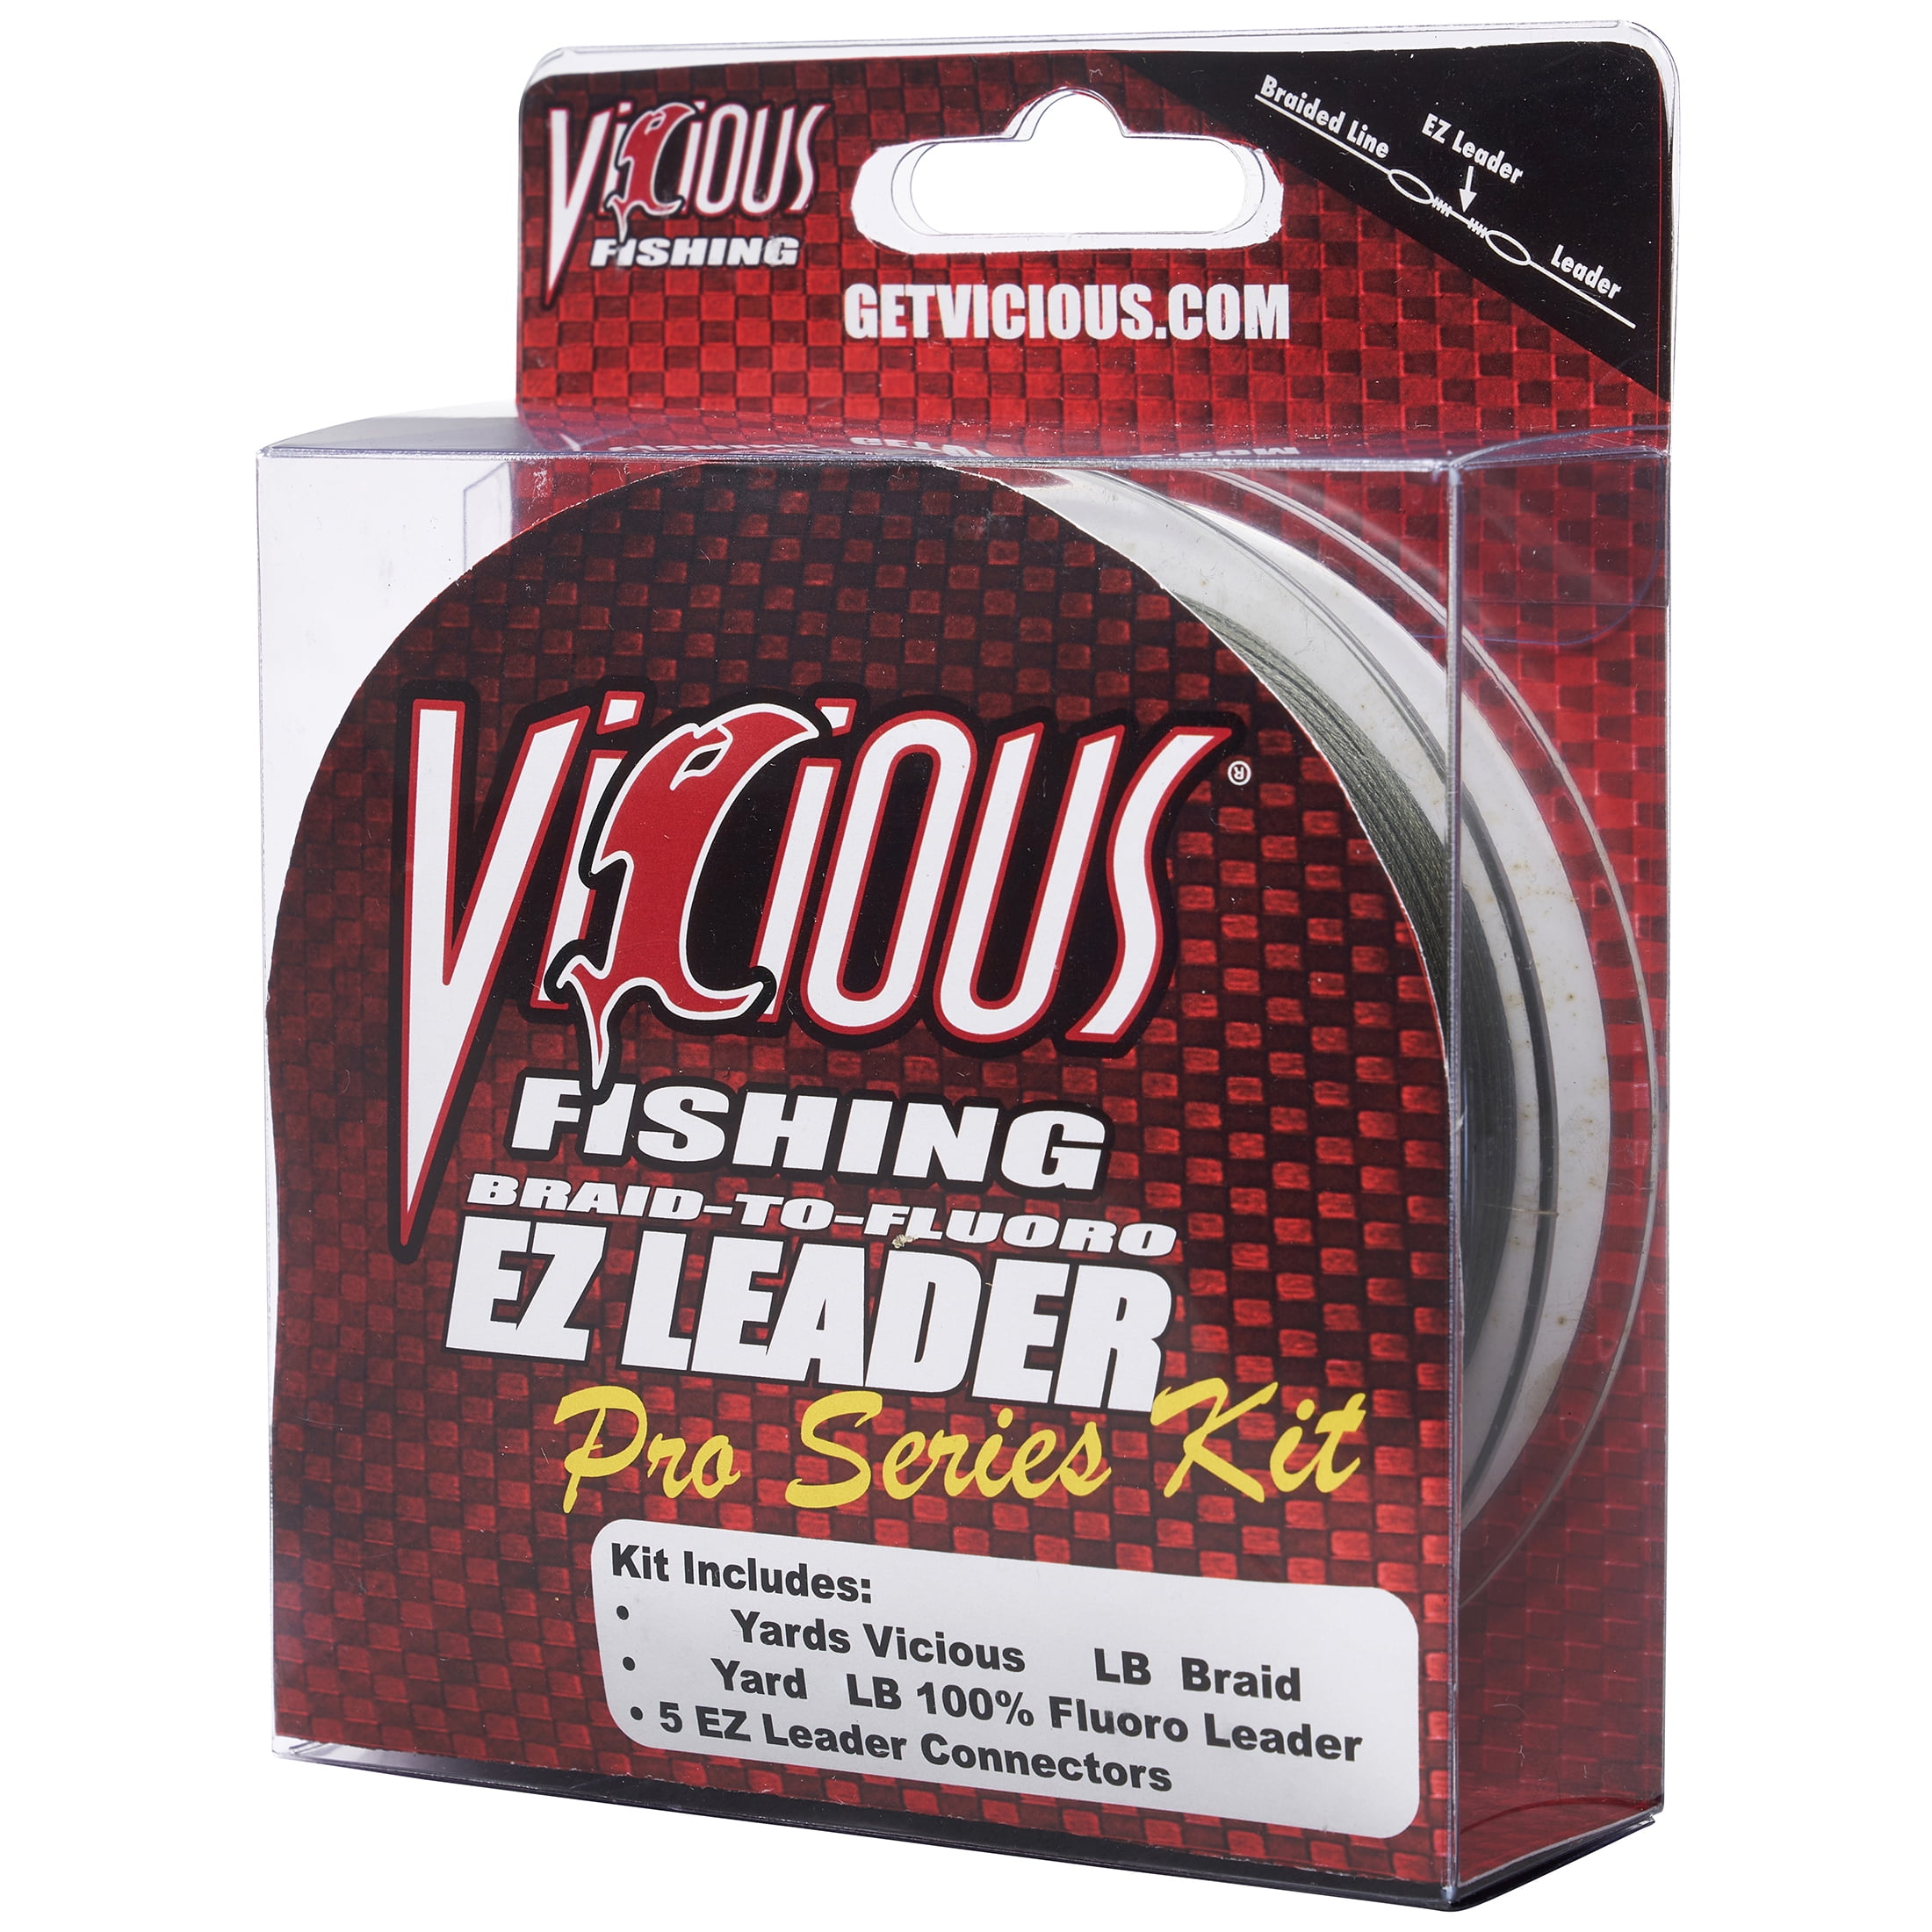 Vicious Fishing EZ Leader Pro Series Fishing Leader Kit, 150 Yards 20lb  Braid, 30 Yards 12lb Fluoro, 5 EZ Leader Connectors